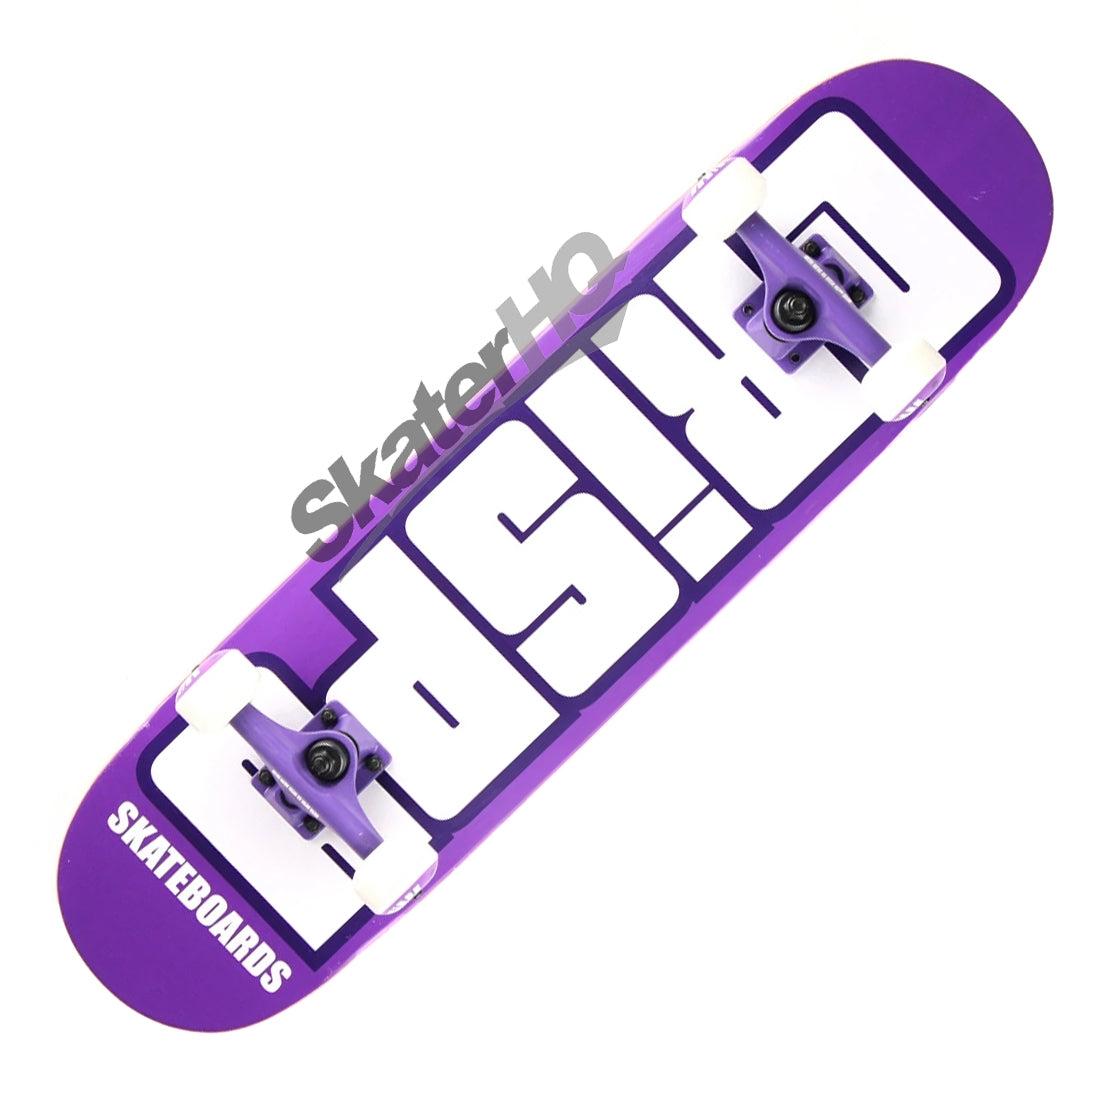 Crispy Advanced 7.75 Complete - Purple/White Skateboard Completes Modern Street